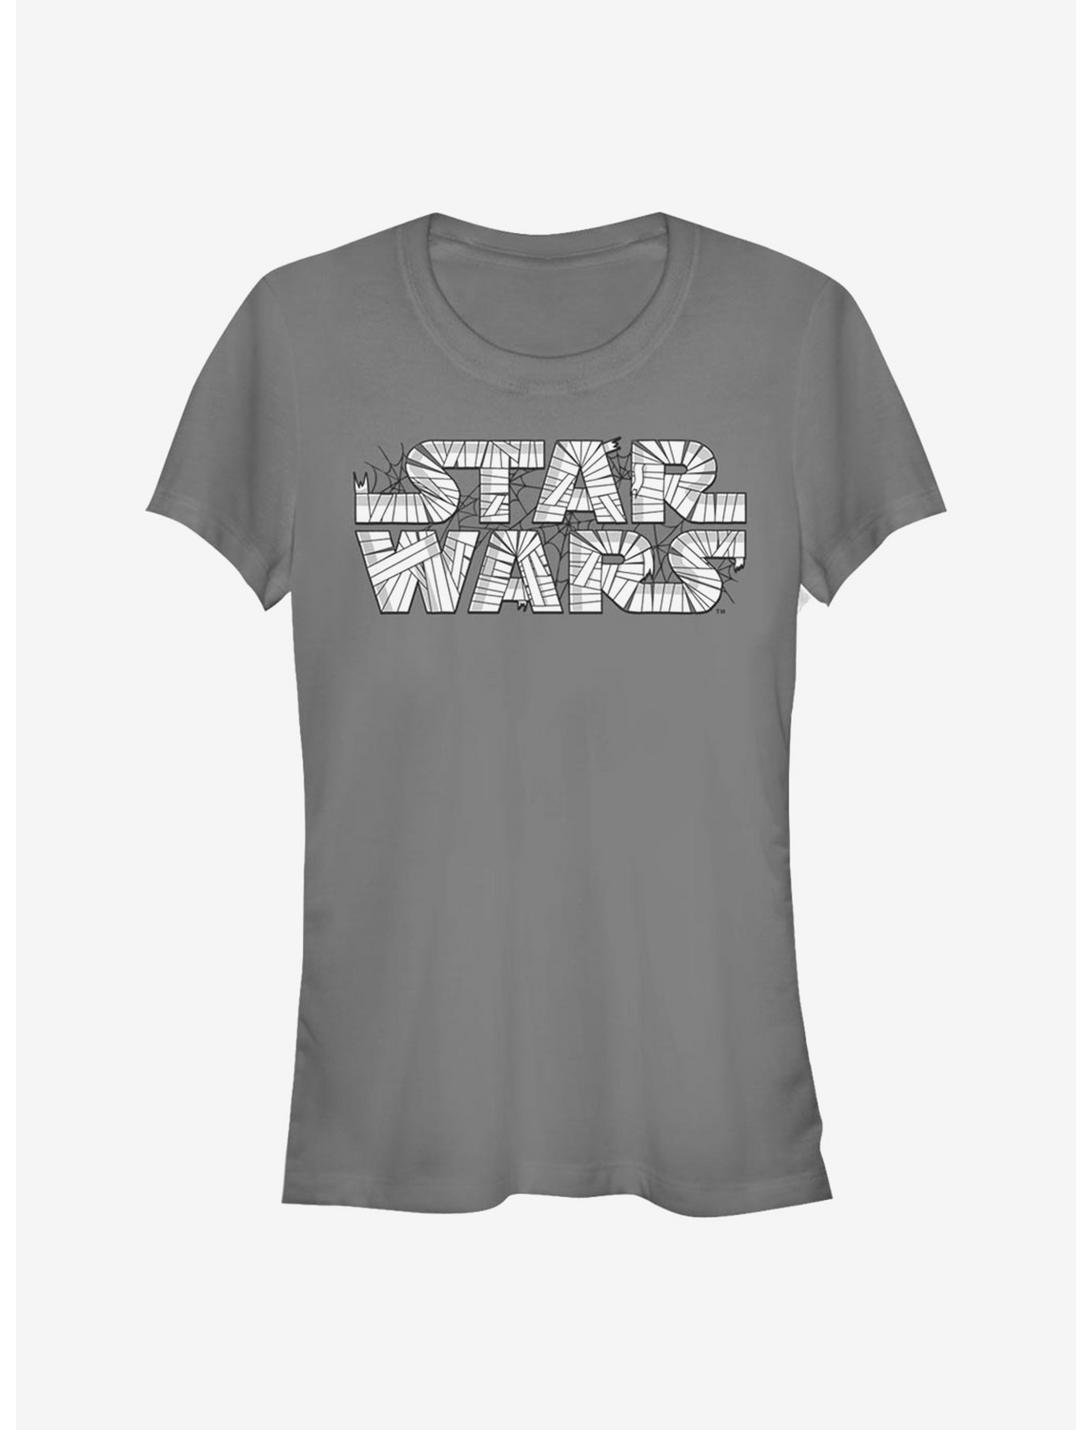 Star Wars Mummy Wrap Logo Girls T-Shirt, CHARCOAL, hi-res